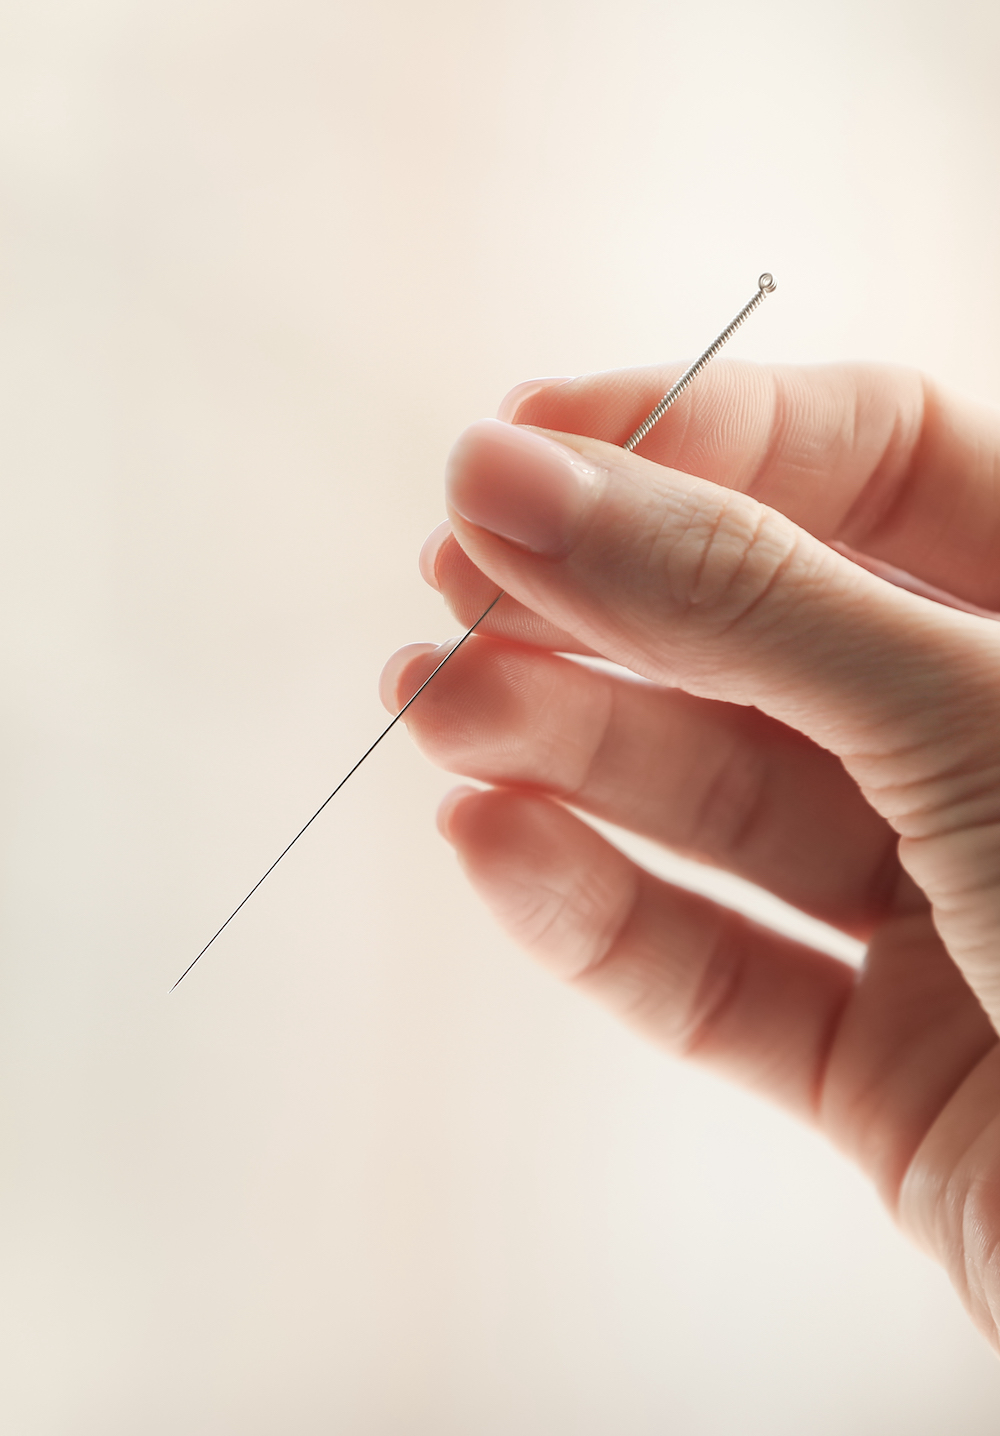 Acupuncture needles. Inserting needles very thin needles - single use, sterile needles.